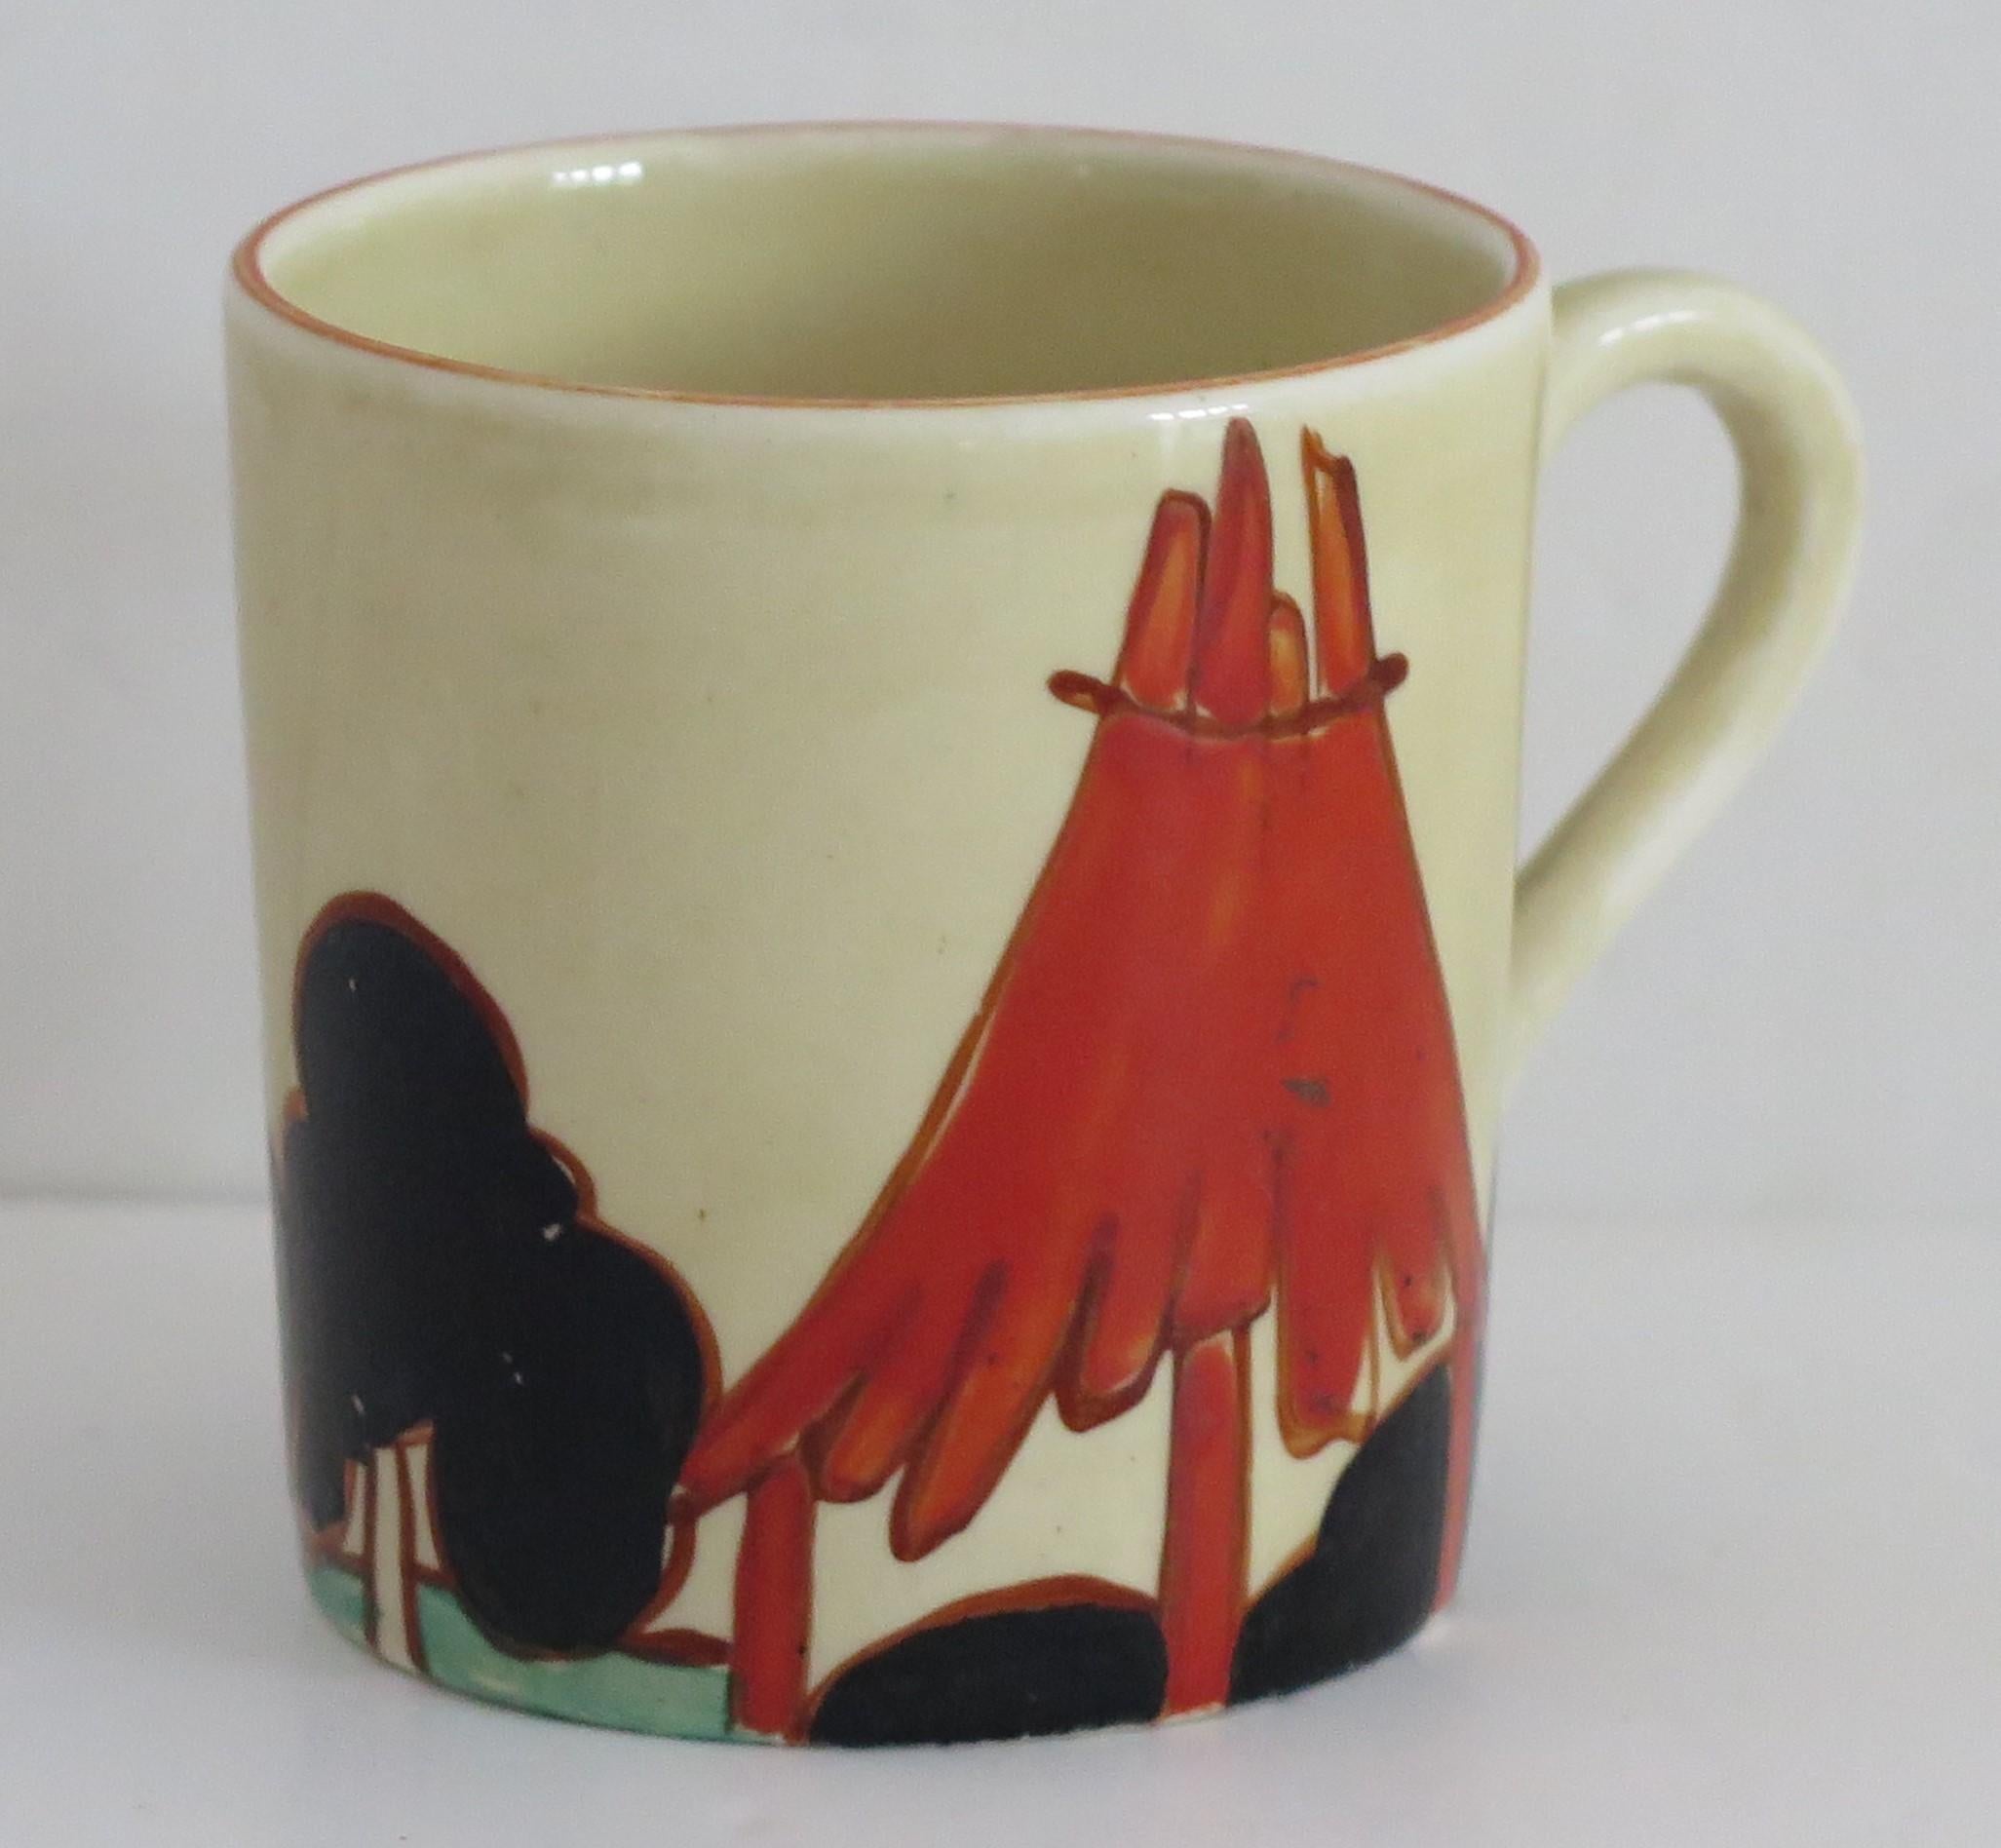 20th Century Clarice Cliff Cup and Saucer Rare Red Autumn Bizarre & Fantasque Ptn, circa 1930